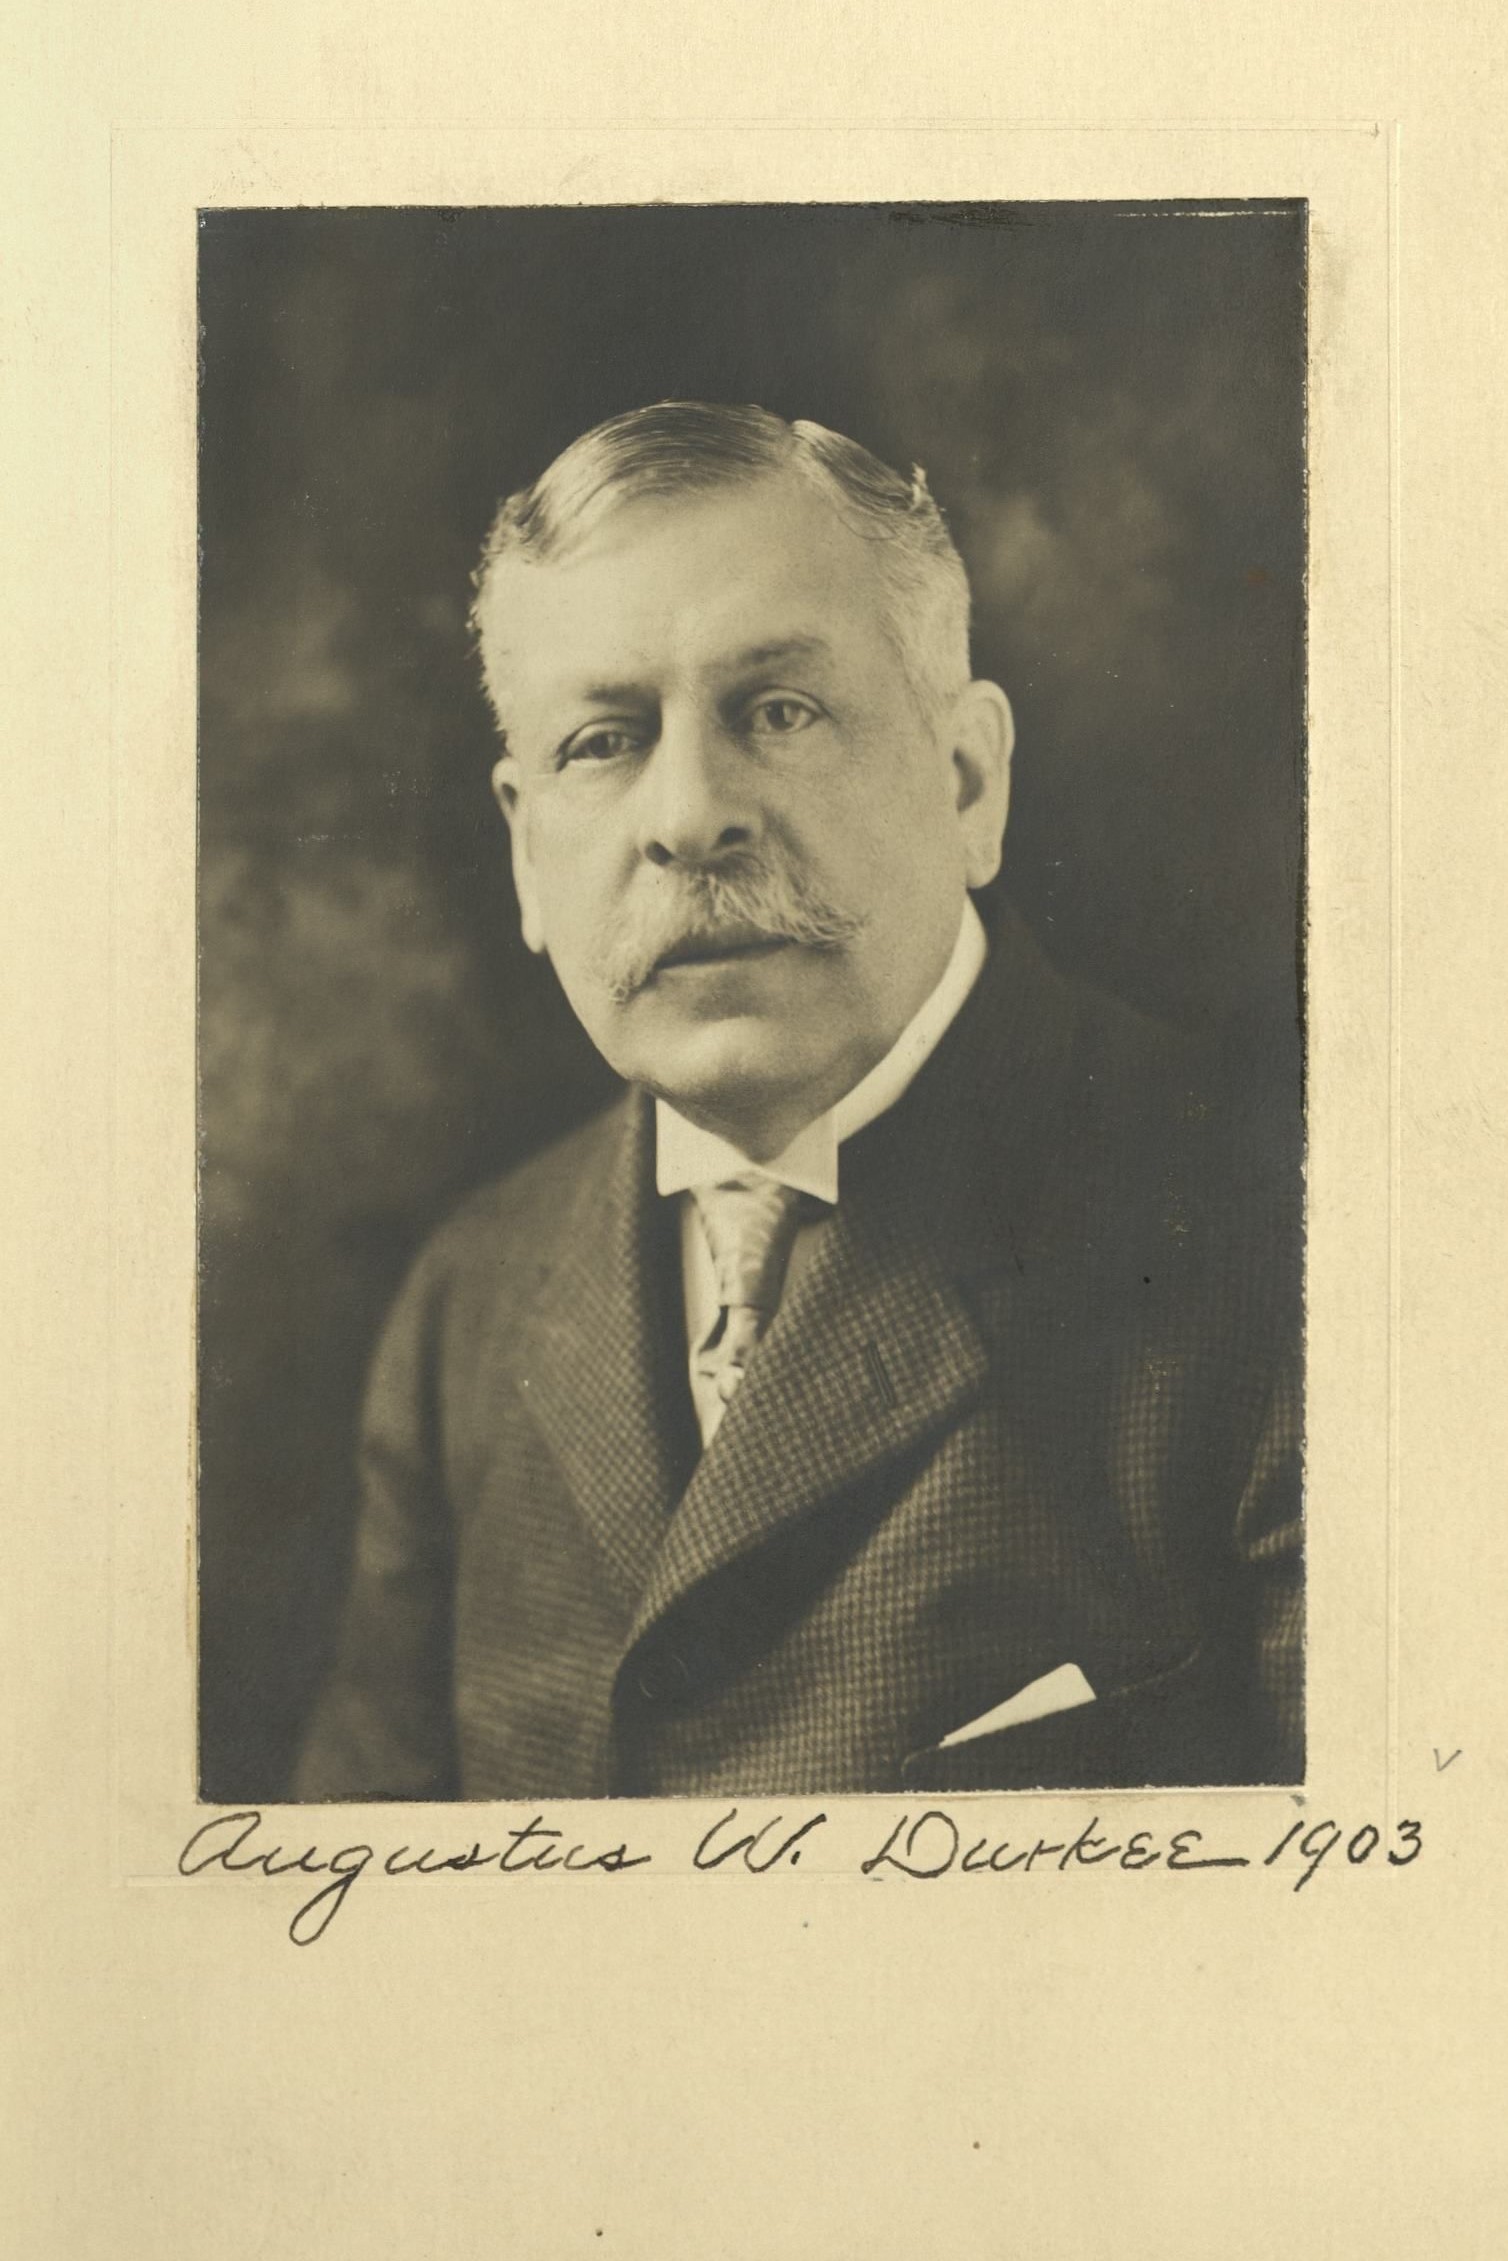 Member portrait of Augustus W. Durkee